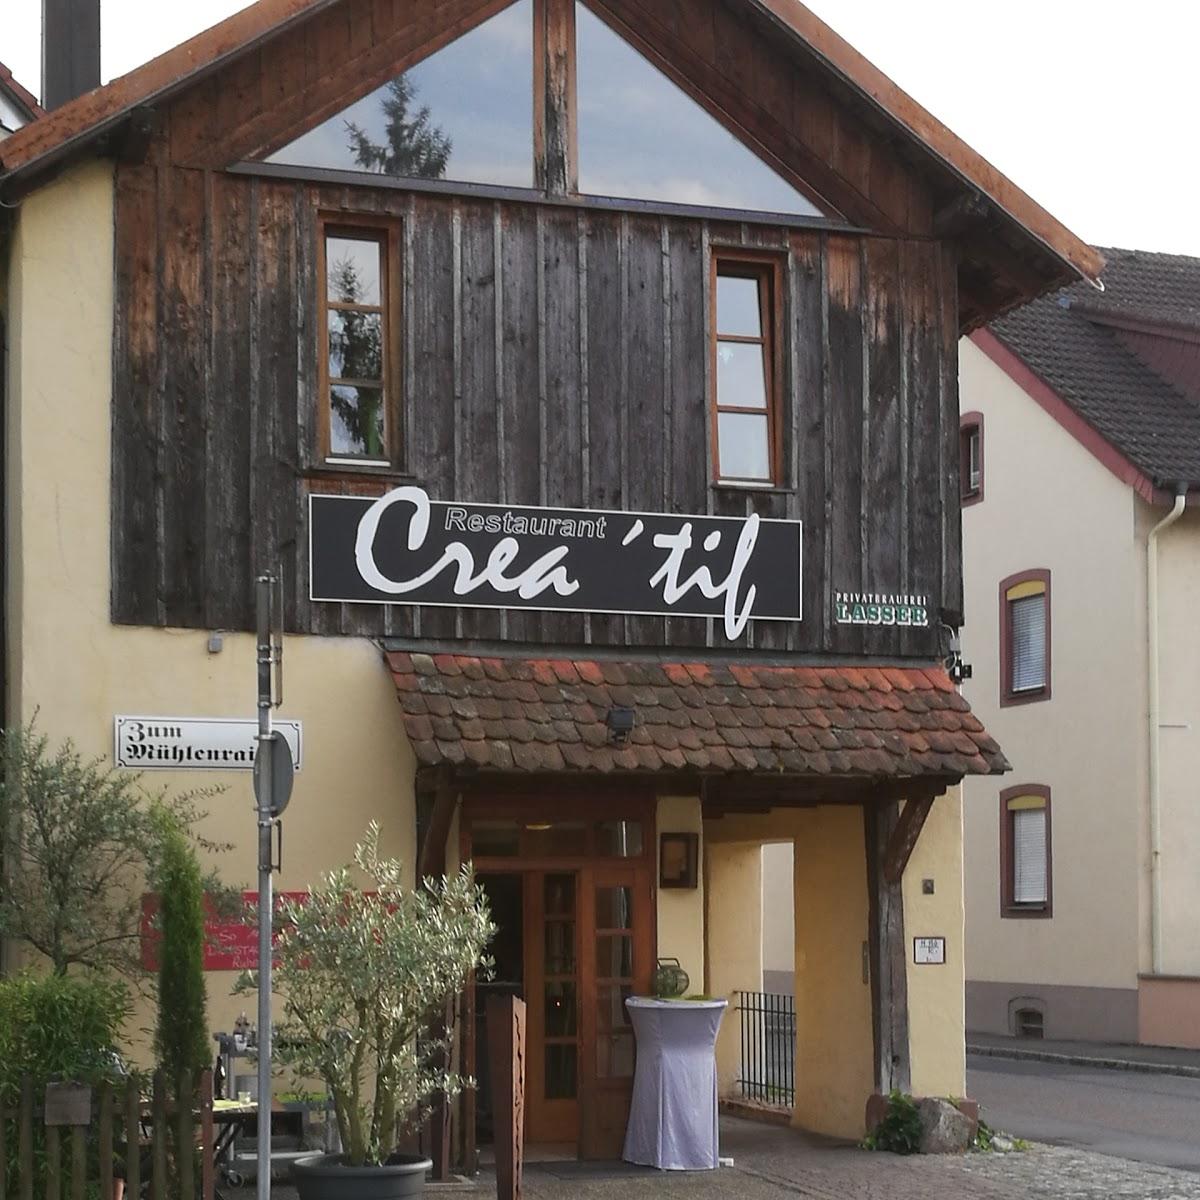 Restaurant "Crea´tif" in Weil am Rhein